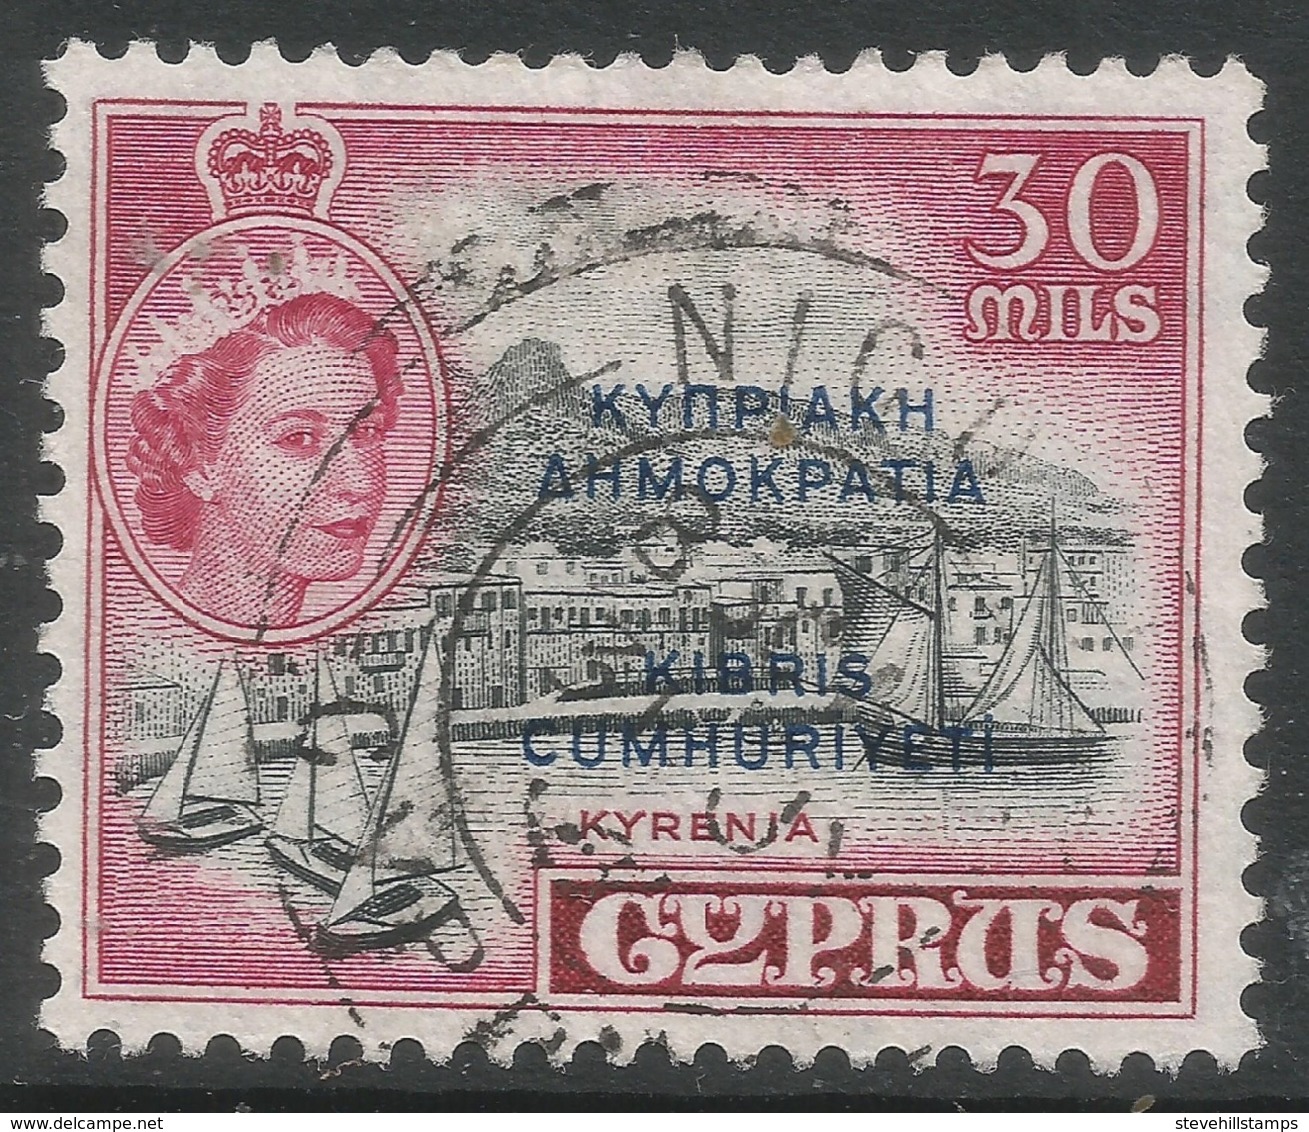 Cyprus. 1960-61 Republic Overprint. 30m Used. SG 195 - Unused Stamps